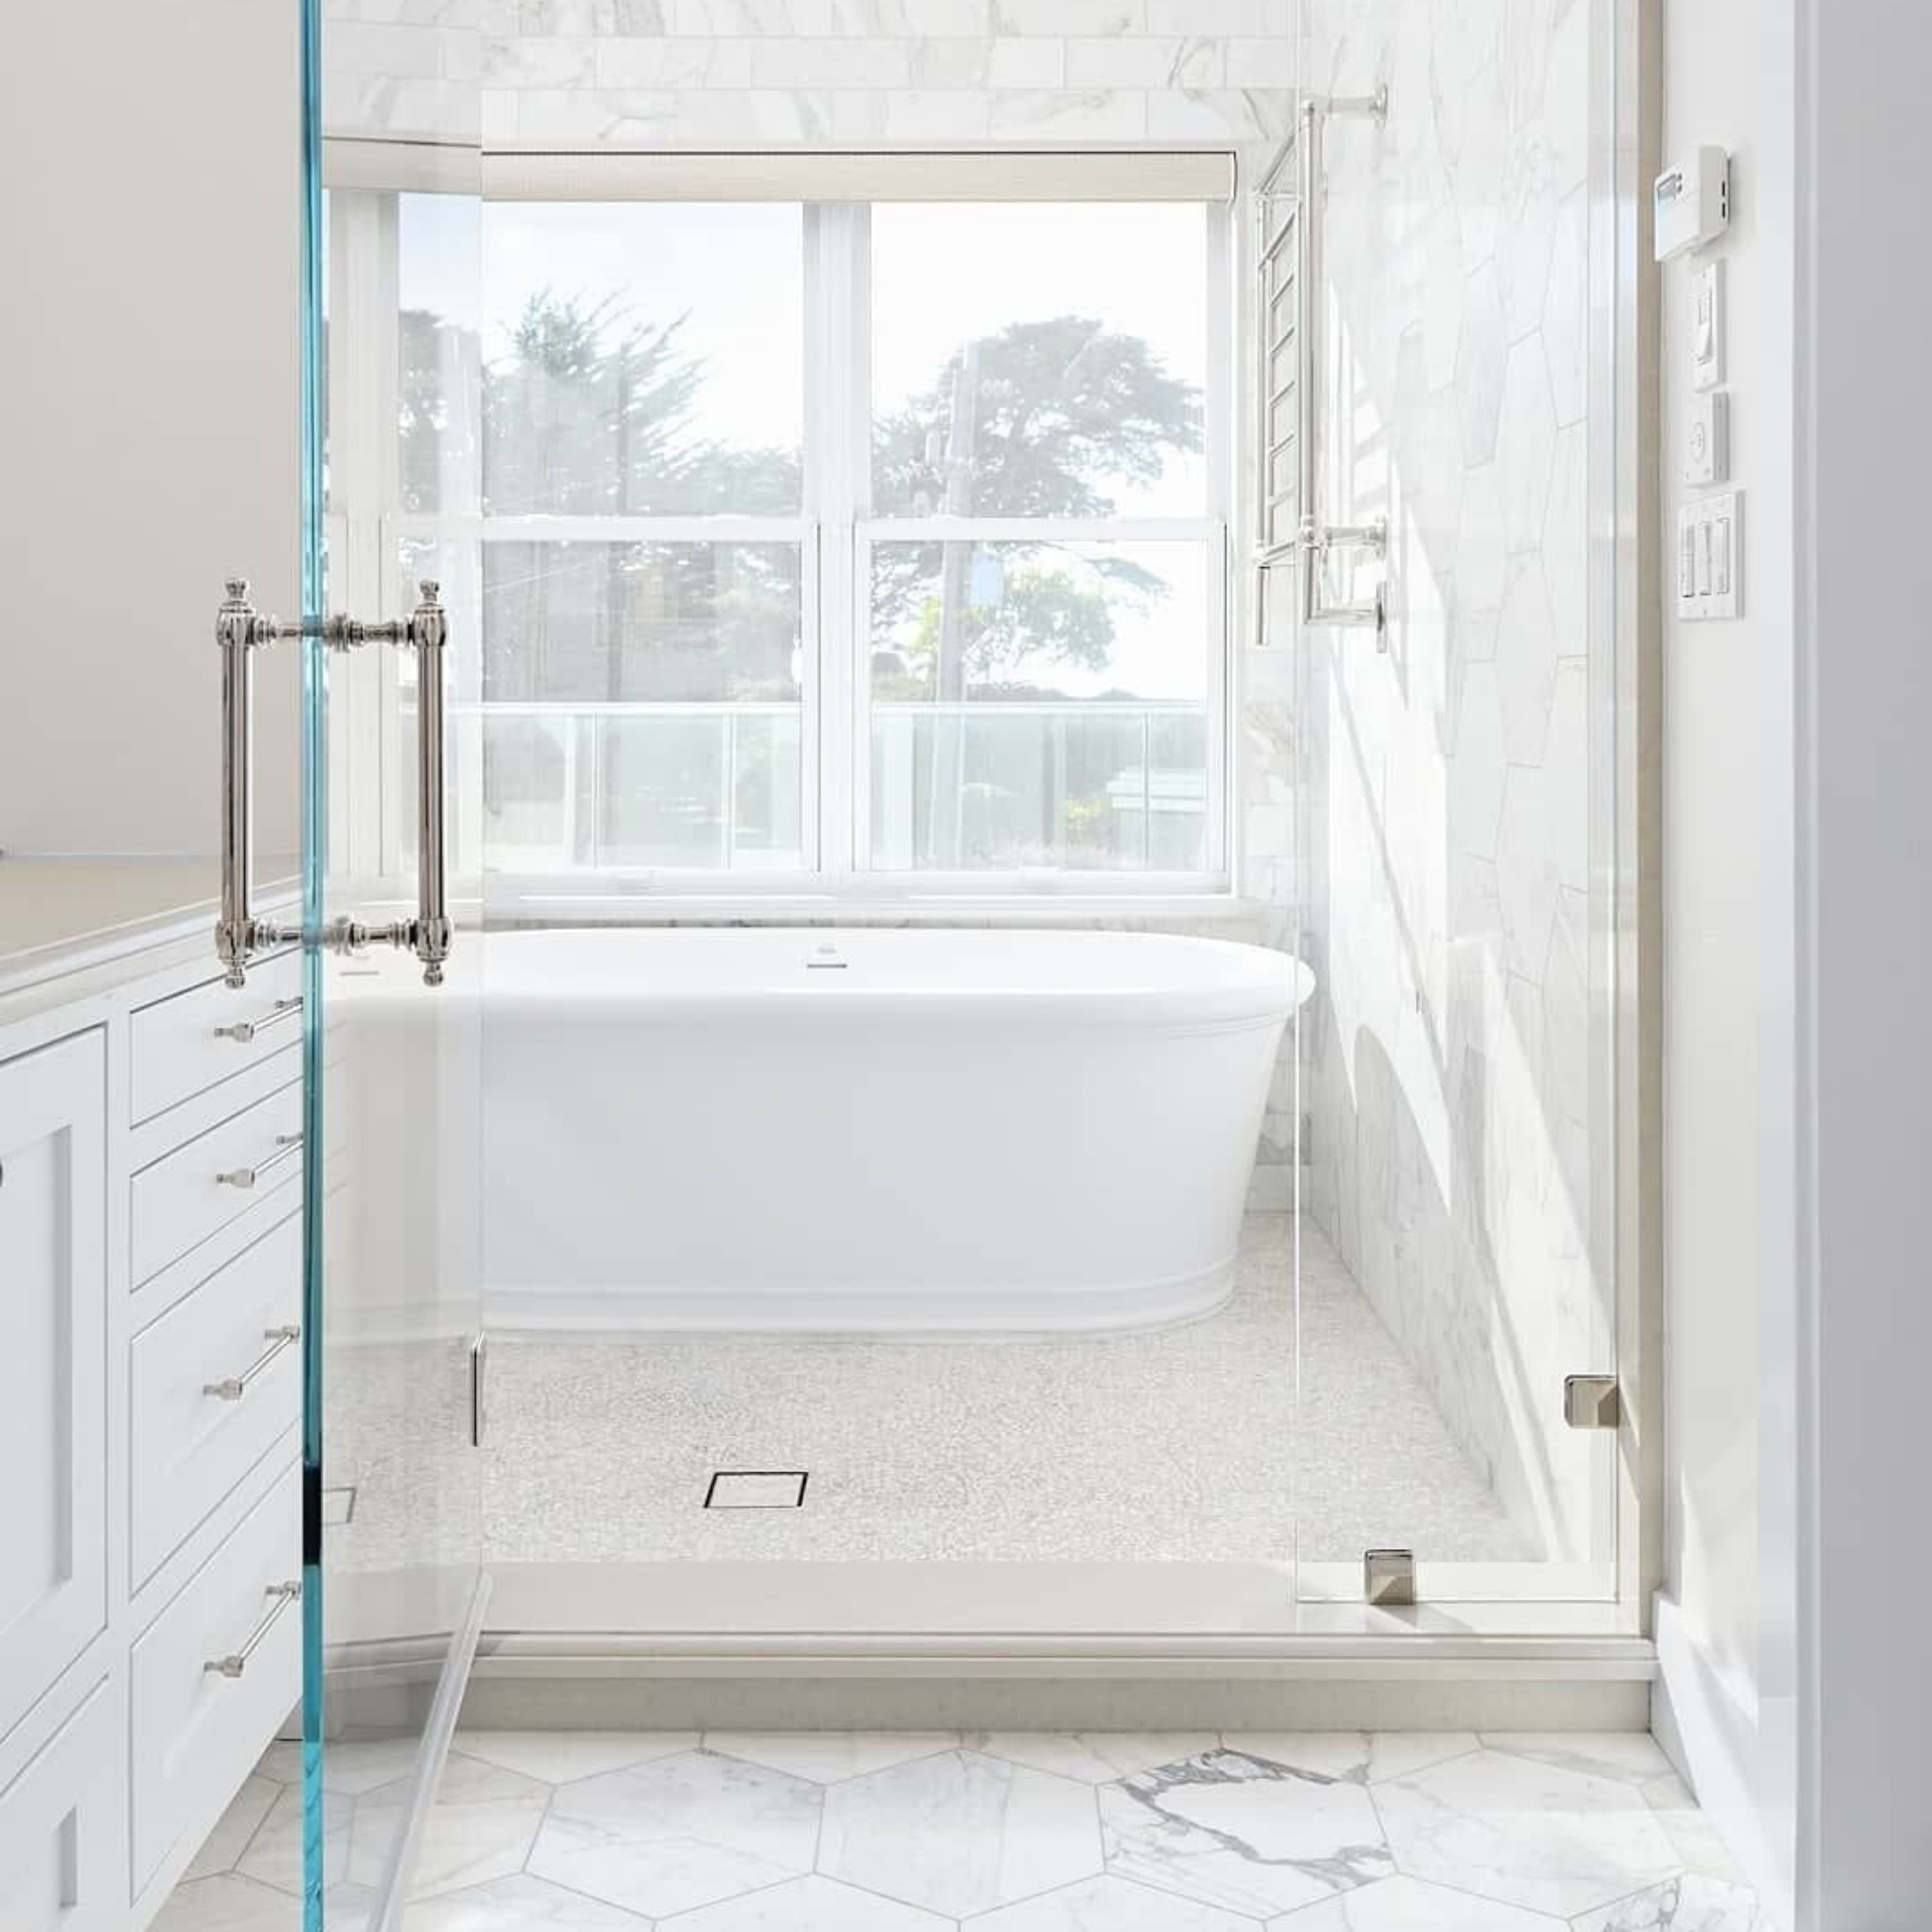 10 Walk In Shower Tile Ideas That Will, Shower Bathroom Tile Ideas